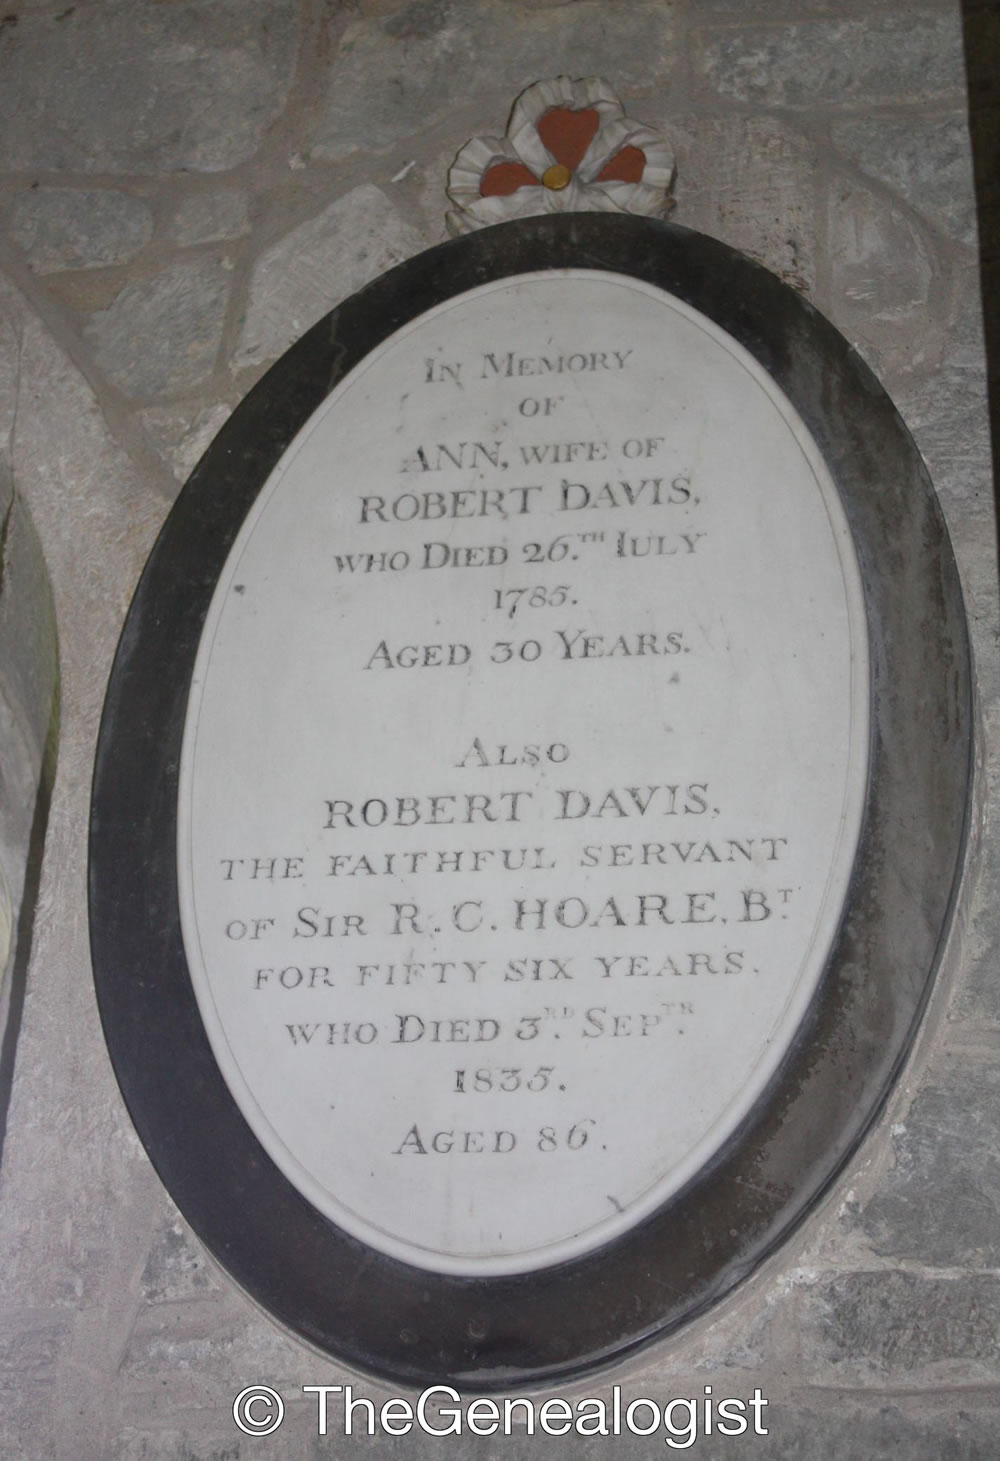 A memorial to Robert Davis and his wife